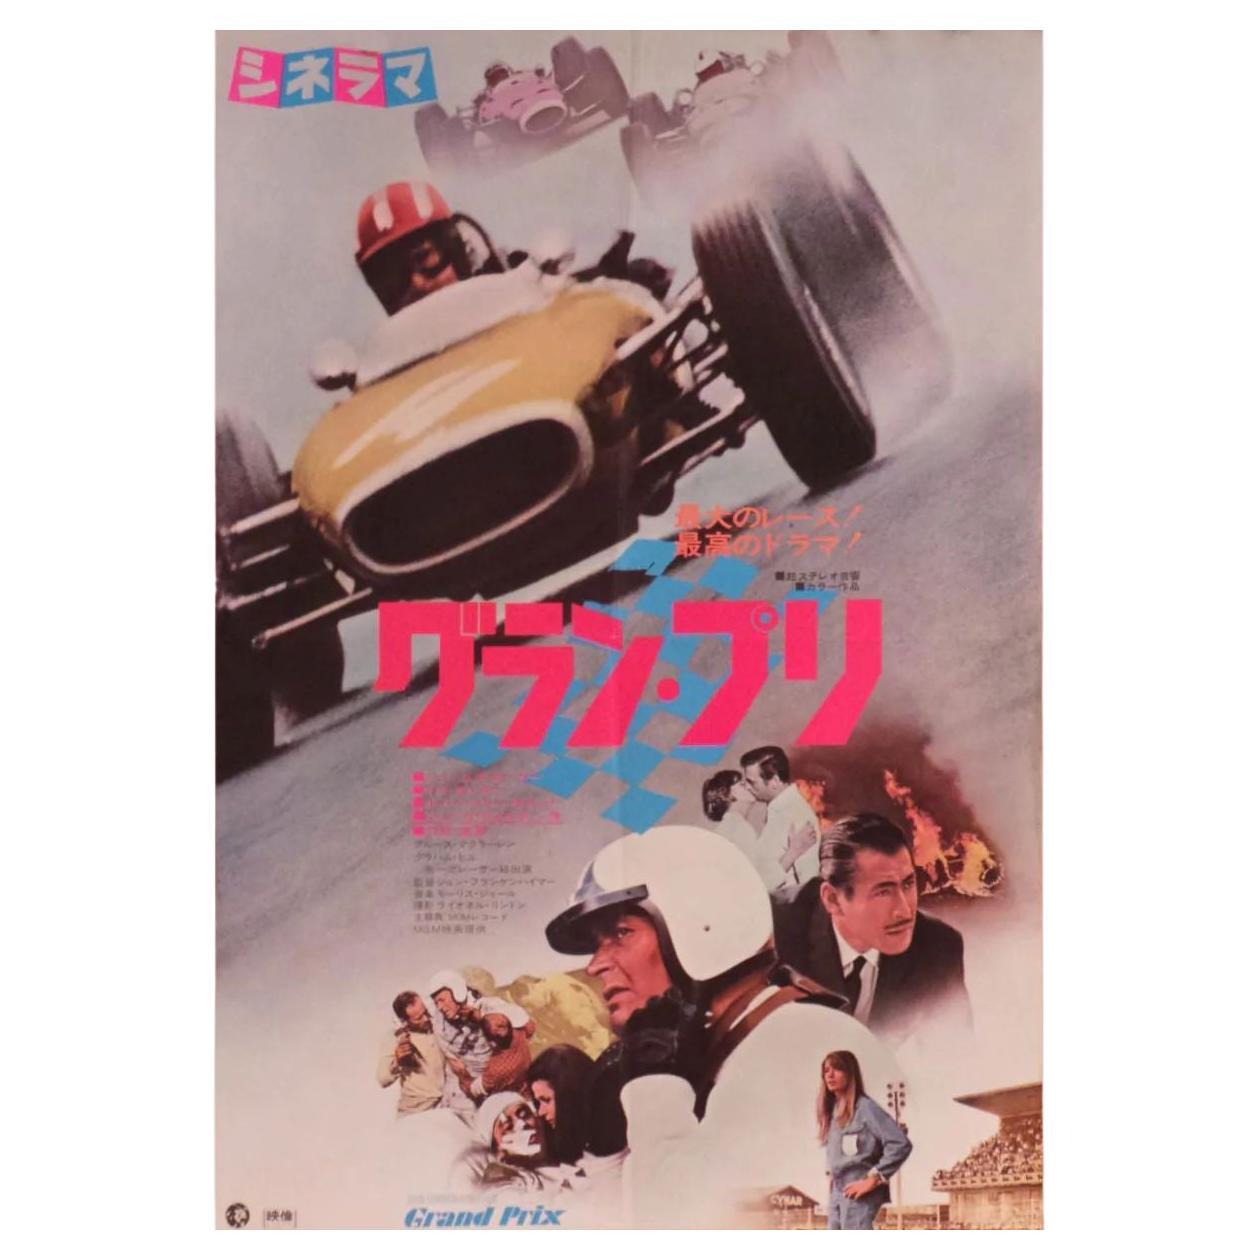 Grand Prix, Unframed Poster, 1966 For Sale